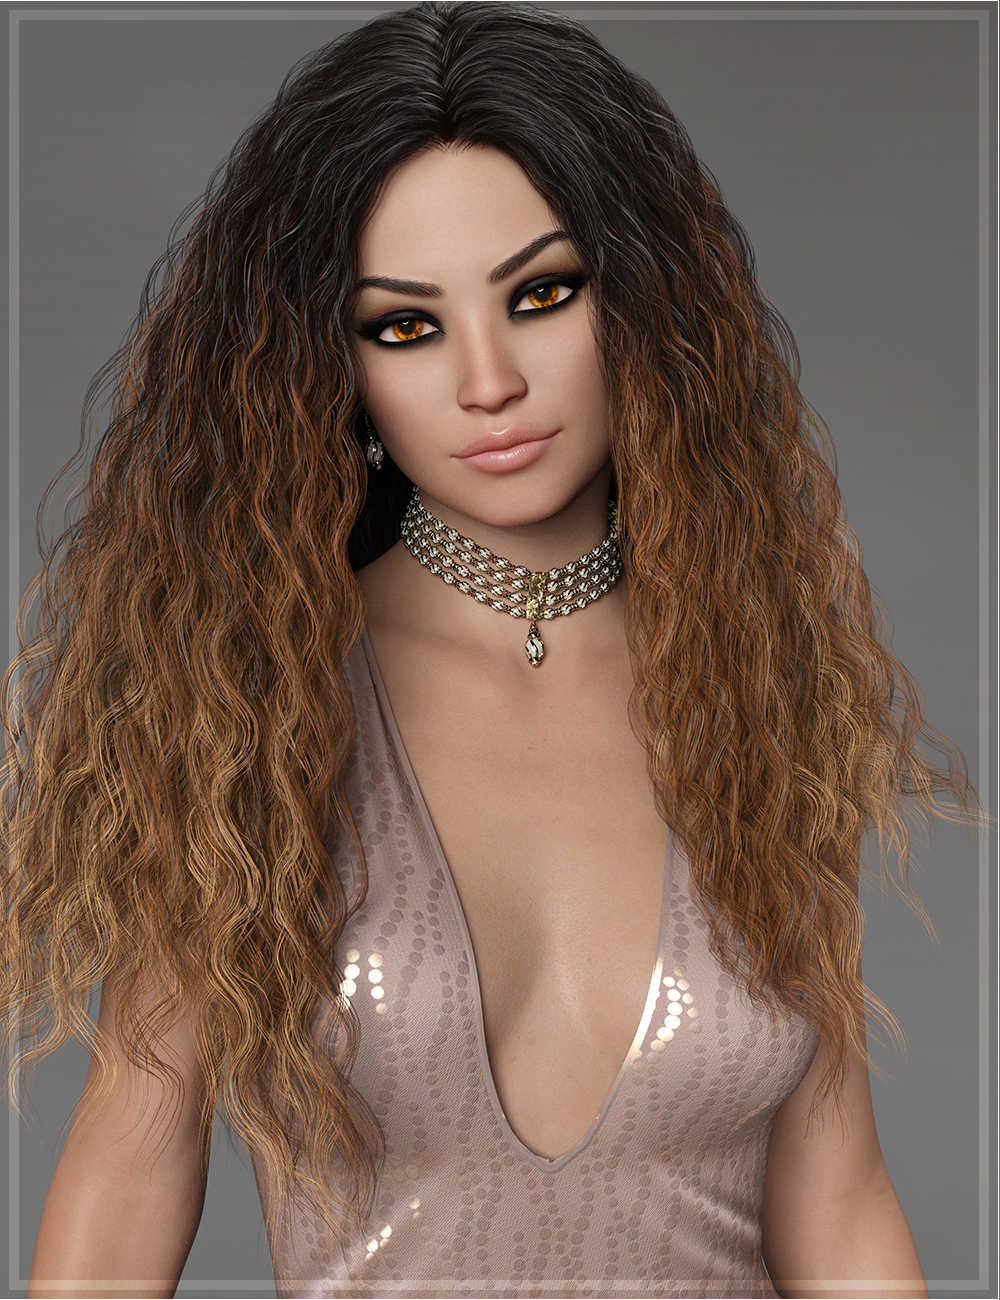 Kytti for Genesis 8 Female by: OziChickhotlilme74, 3D Models by Daz 3D